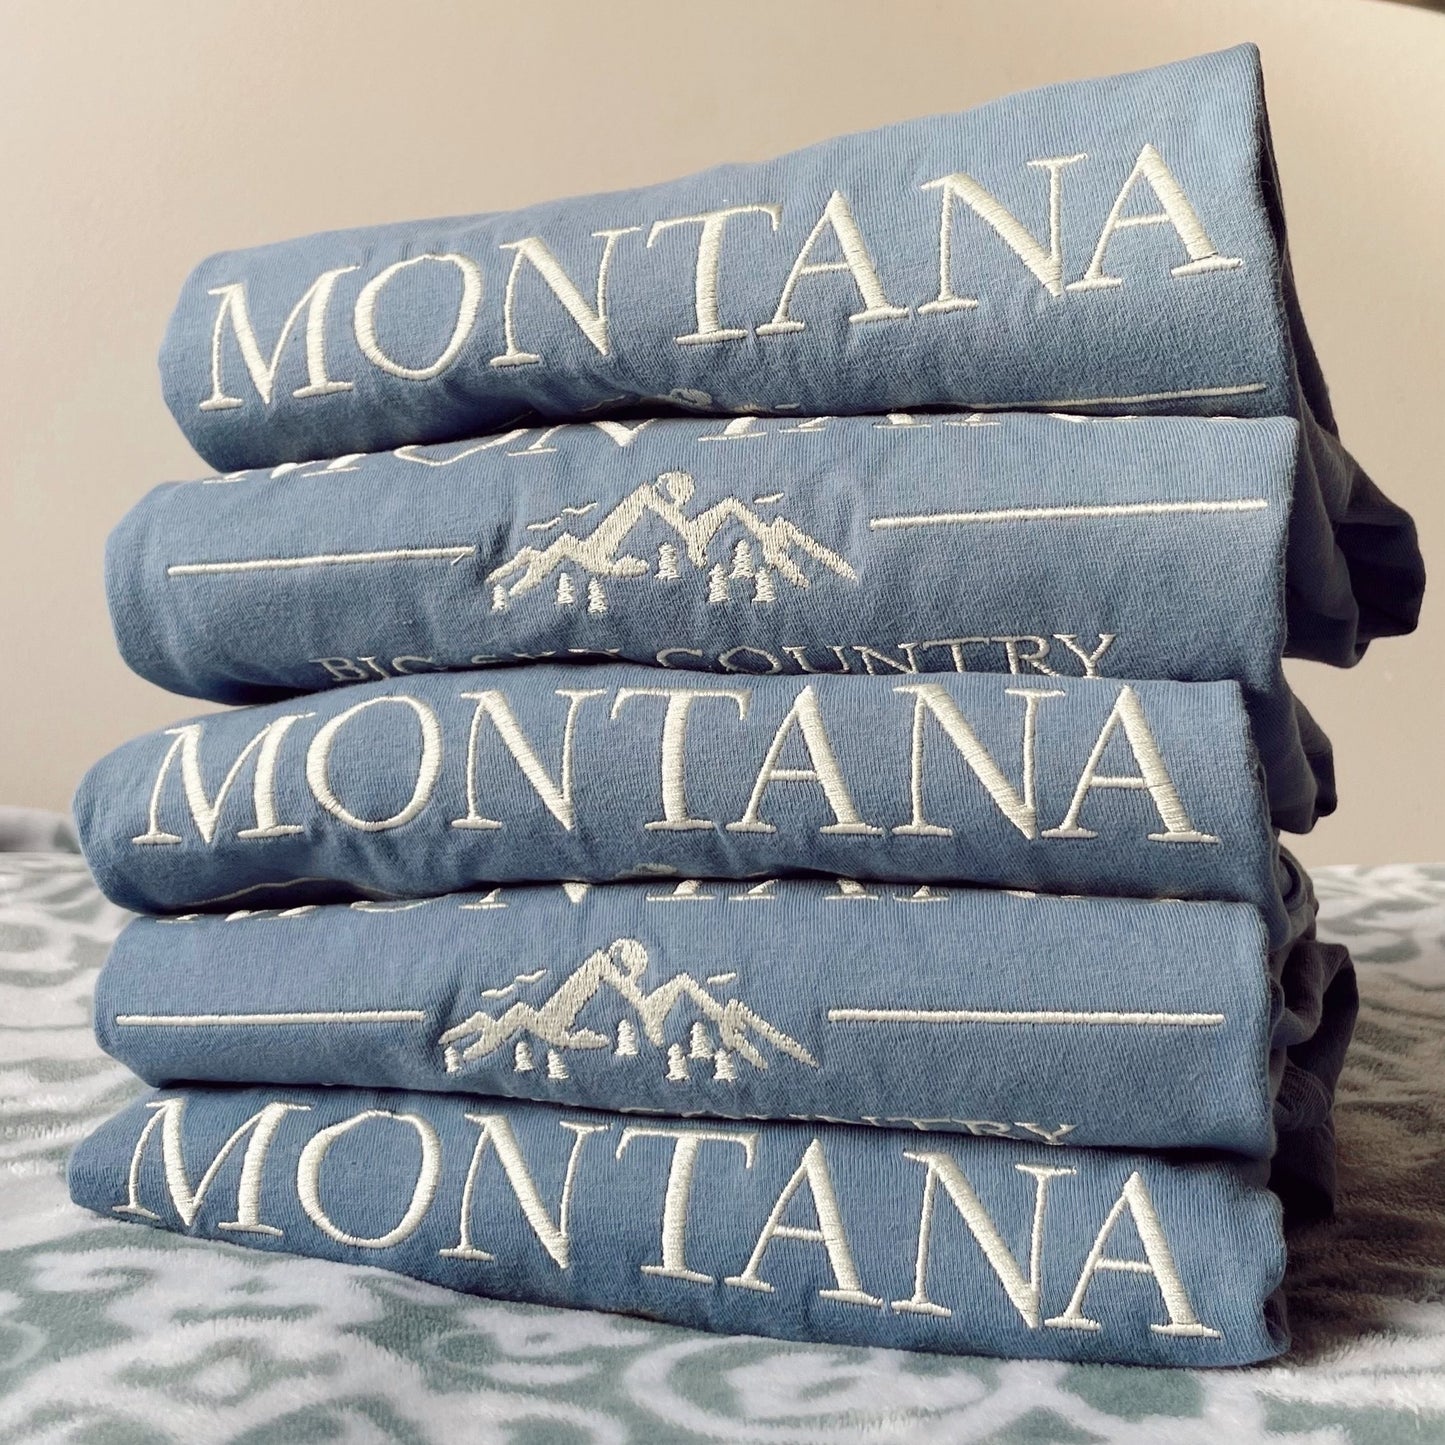 Montana Embroidered Tee - Alex Blom Creates